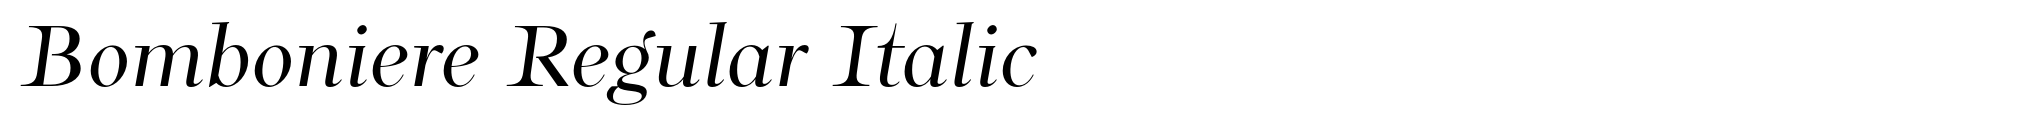 Bomboniere Regular Italic image